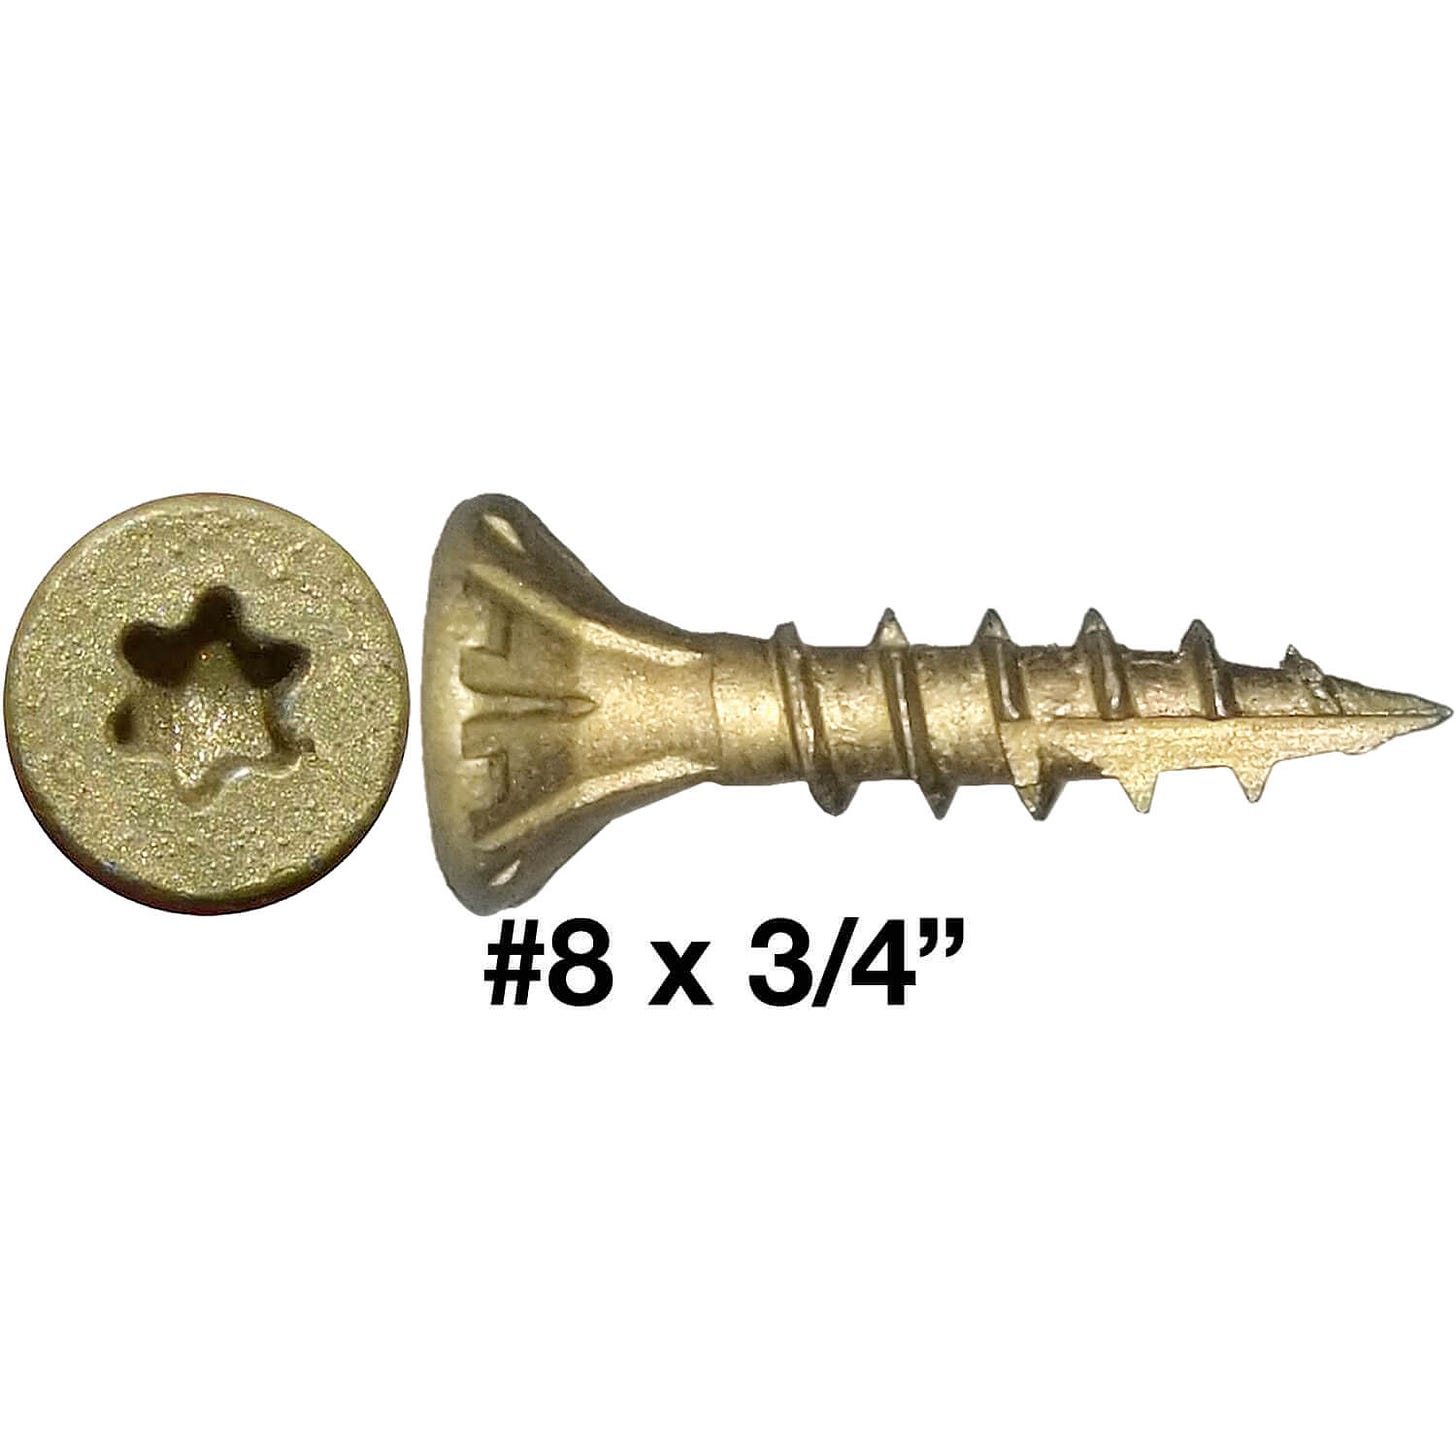 8 x 3/4" Bronze Star Exterior Coated Wood Screw Torx/Star Drive Head -  Multipurpose Exterior Coated Torx/Star Drive Wood Screws - (1 POUND